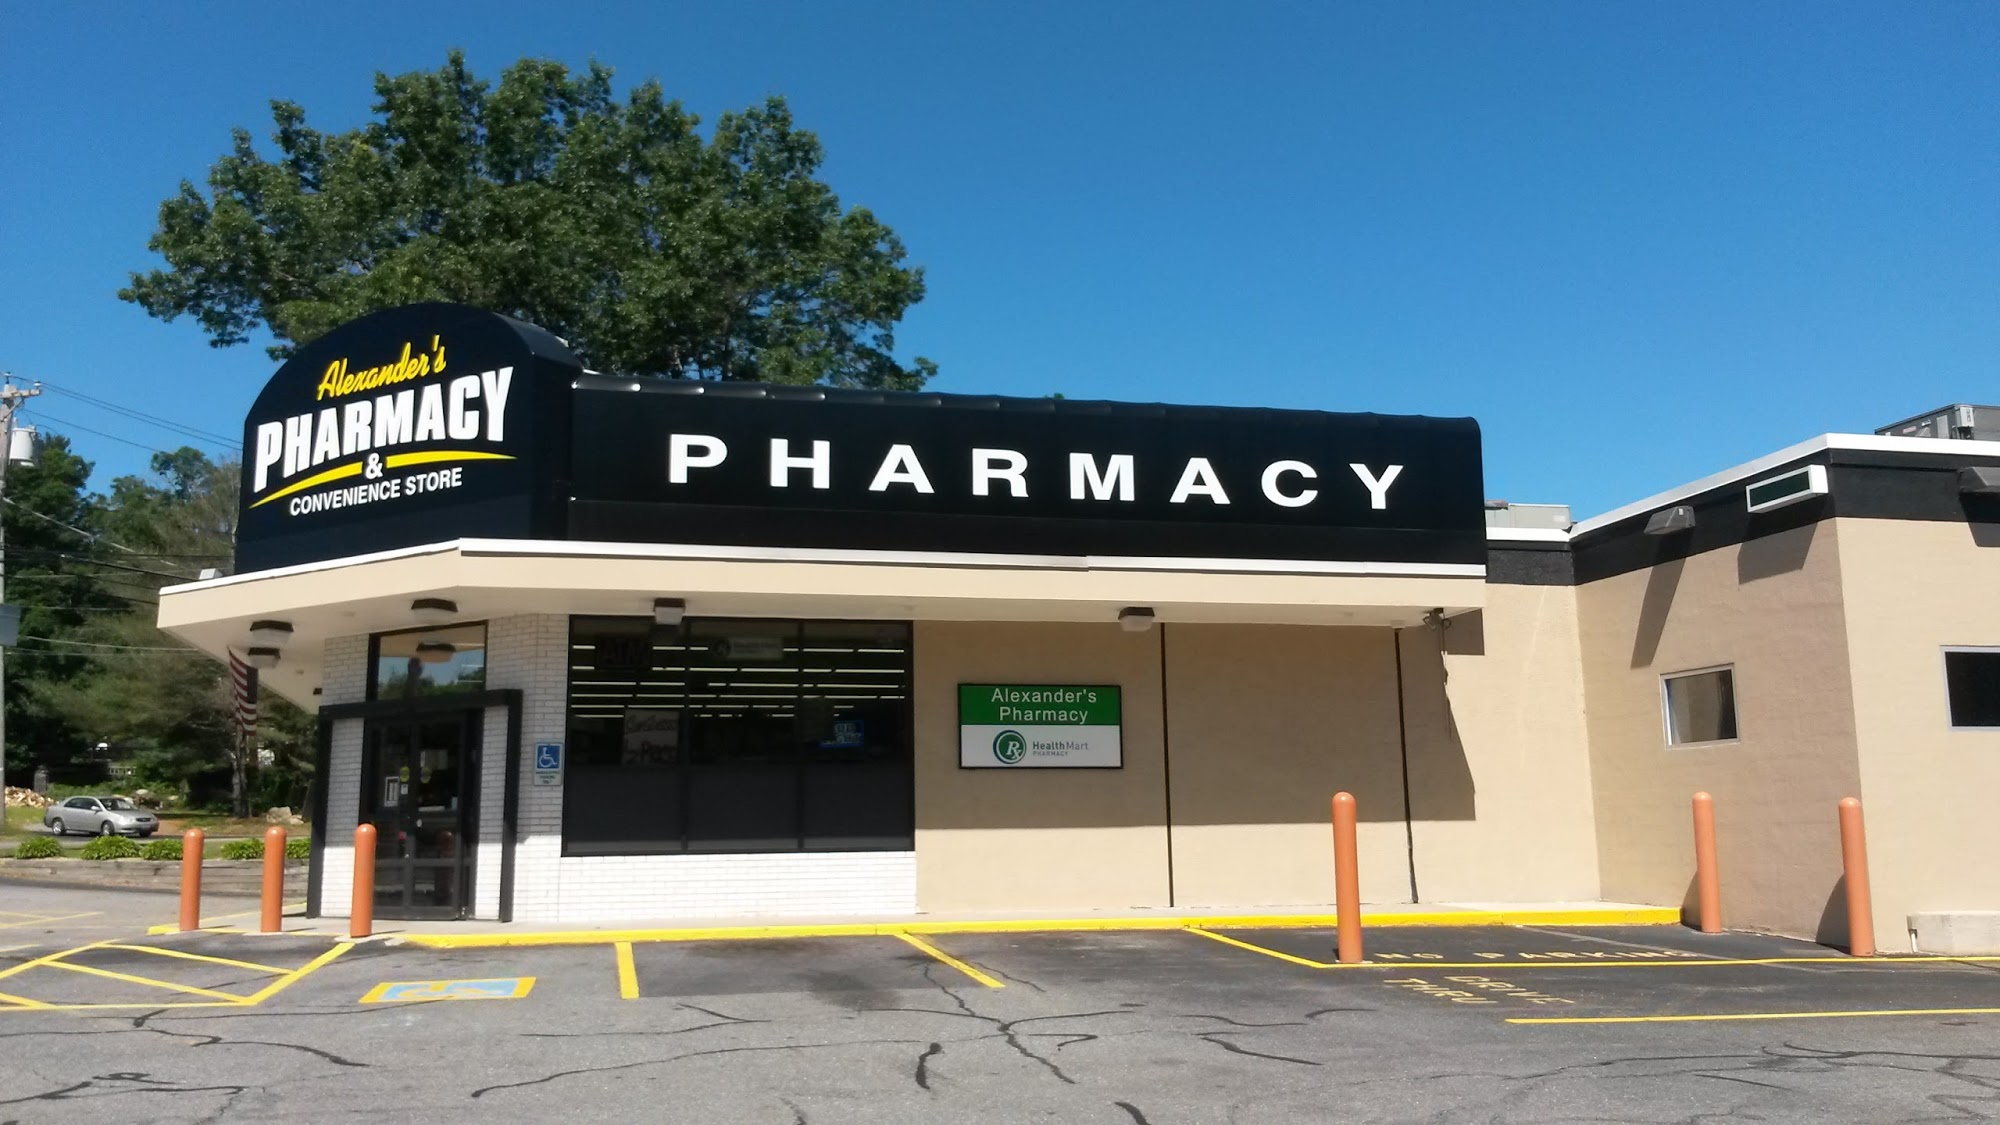 Alexander's Pharmacy Inc